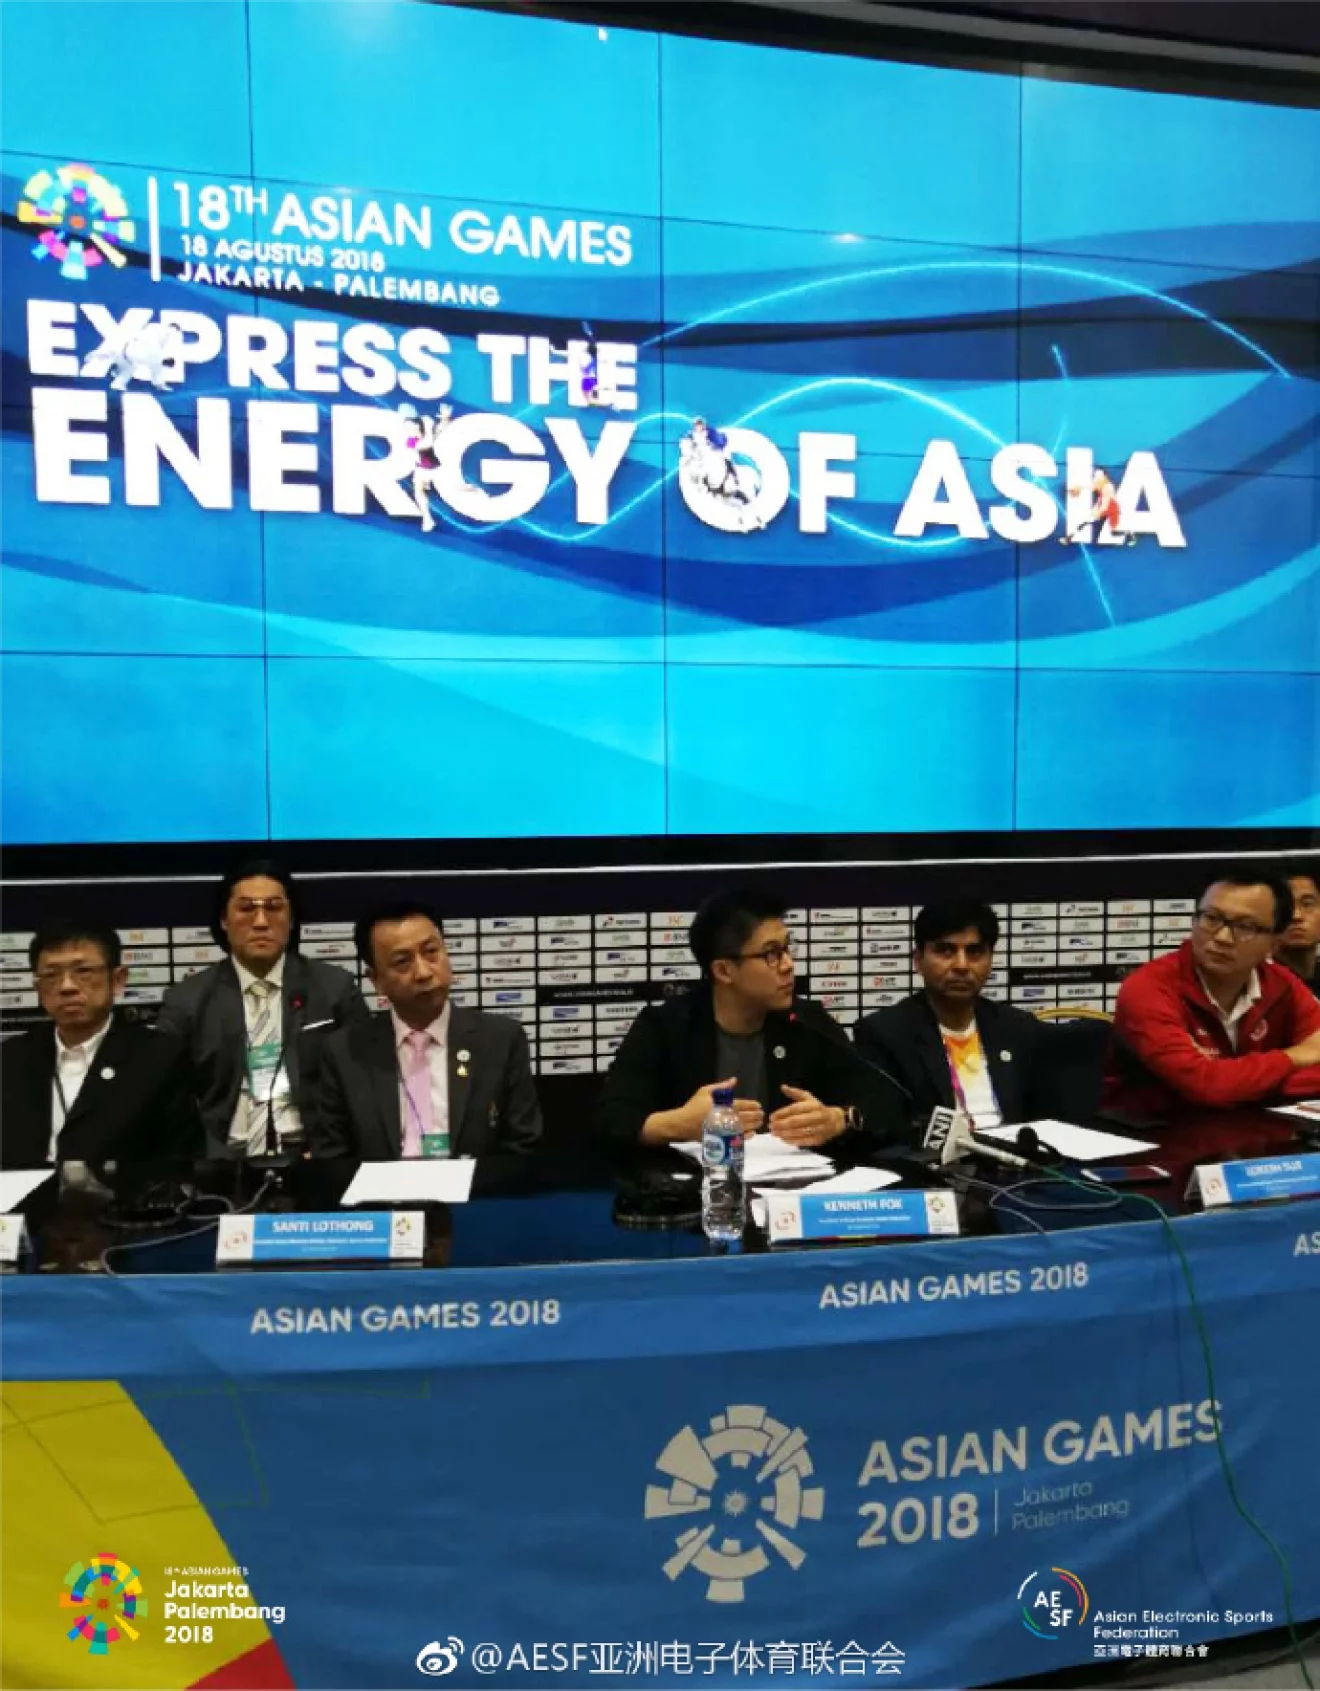 AESF亚洲电子体育联合会在亚运会新闻中心召开发布会